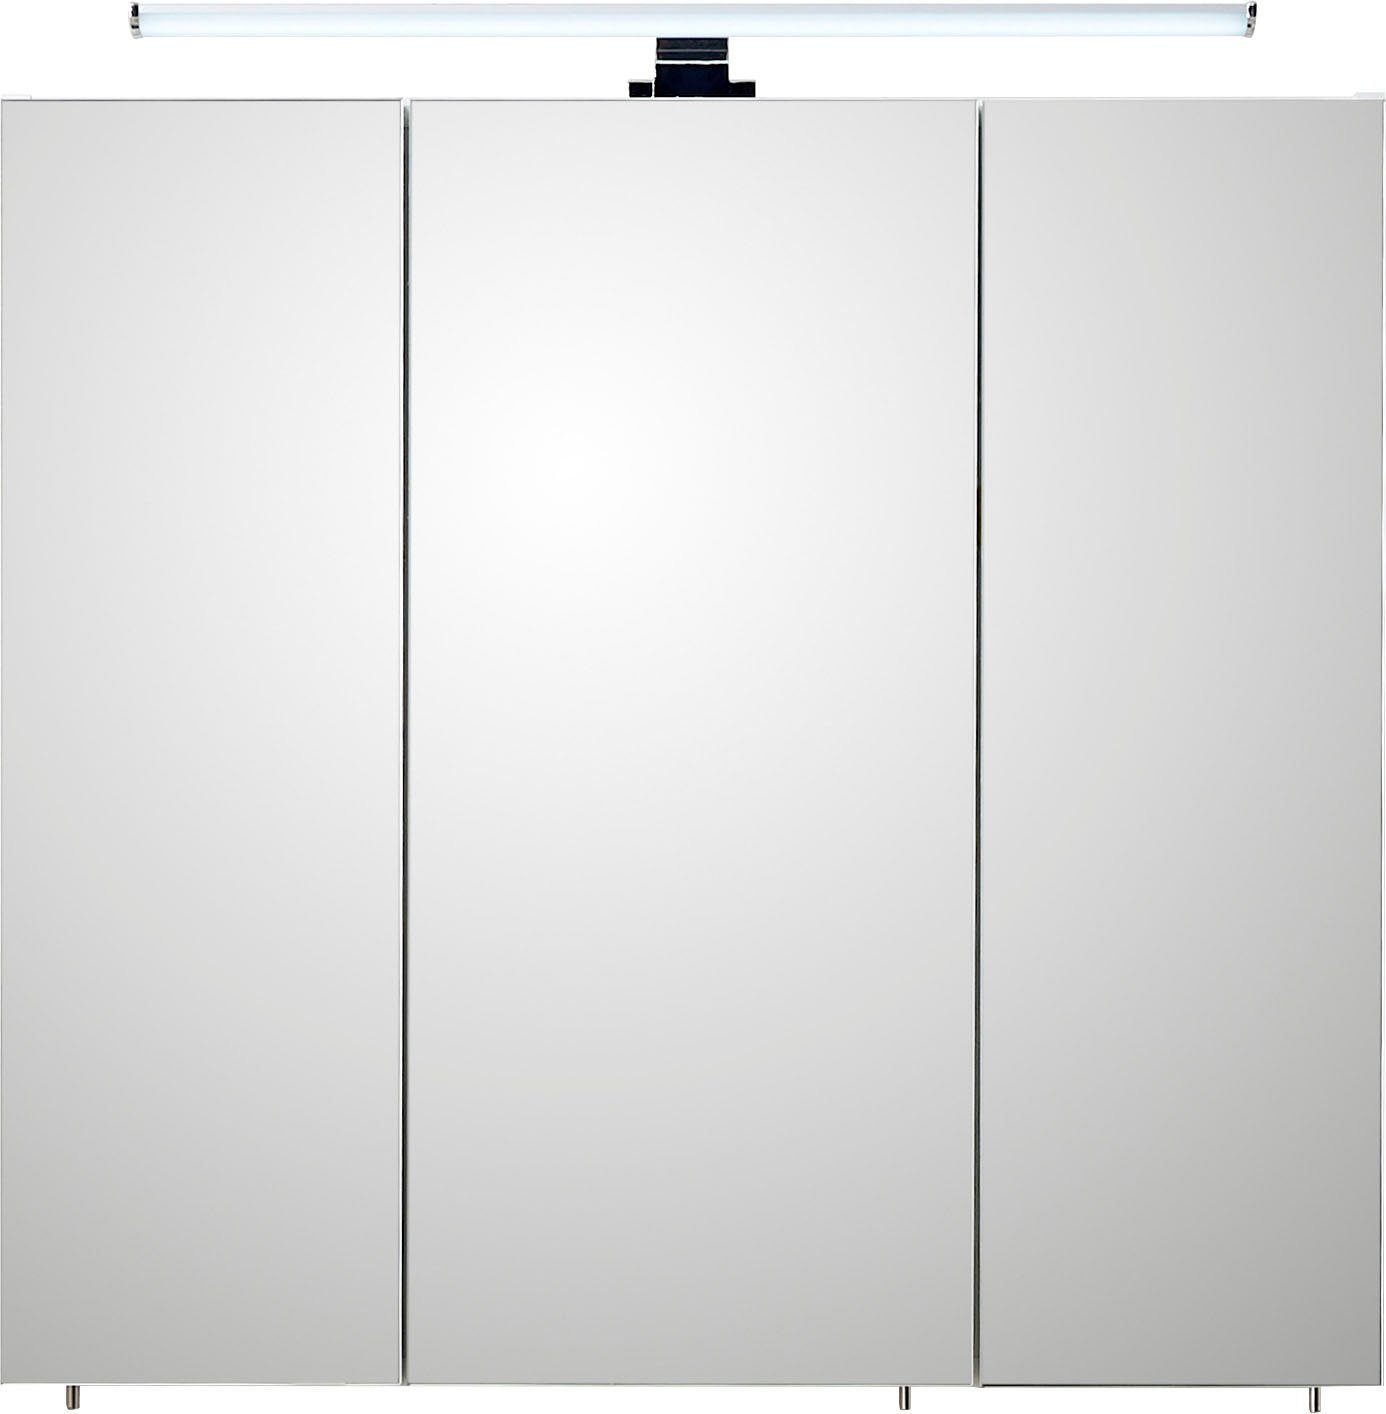 PELIPAL Spiegelschrank Quickset 360 cm, Schalter-/Steckdosenbox Breite 3-türig, 75 LED-Beleuchtung